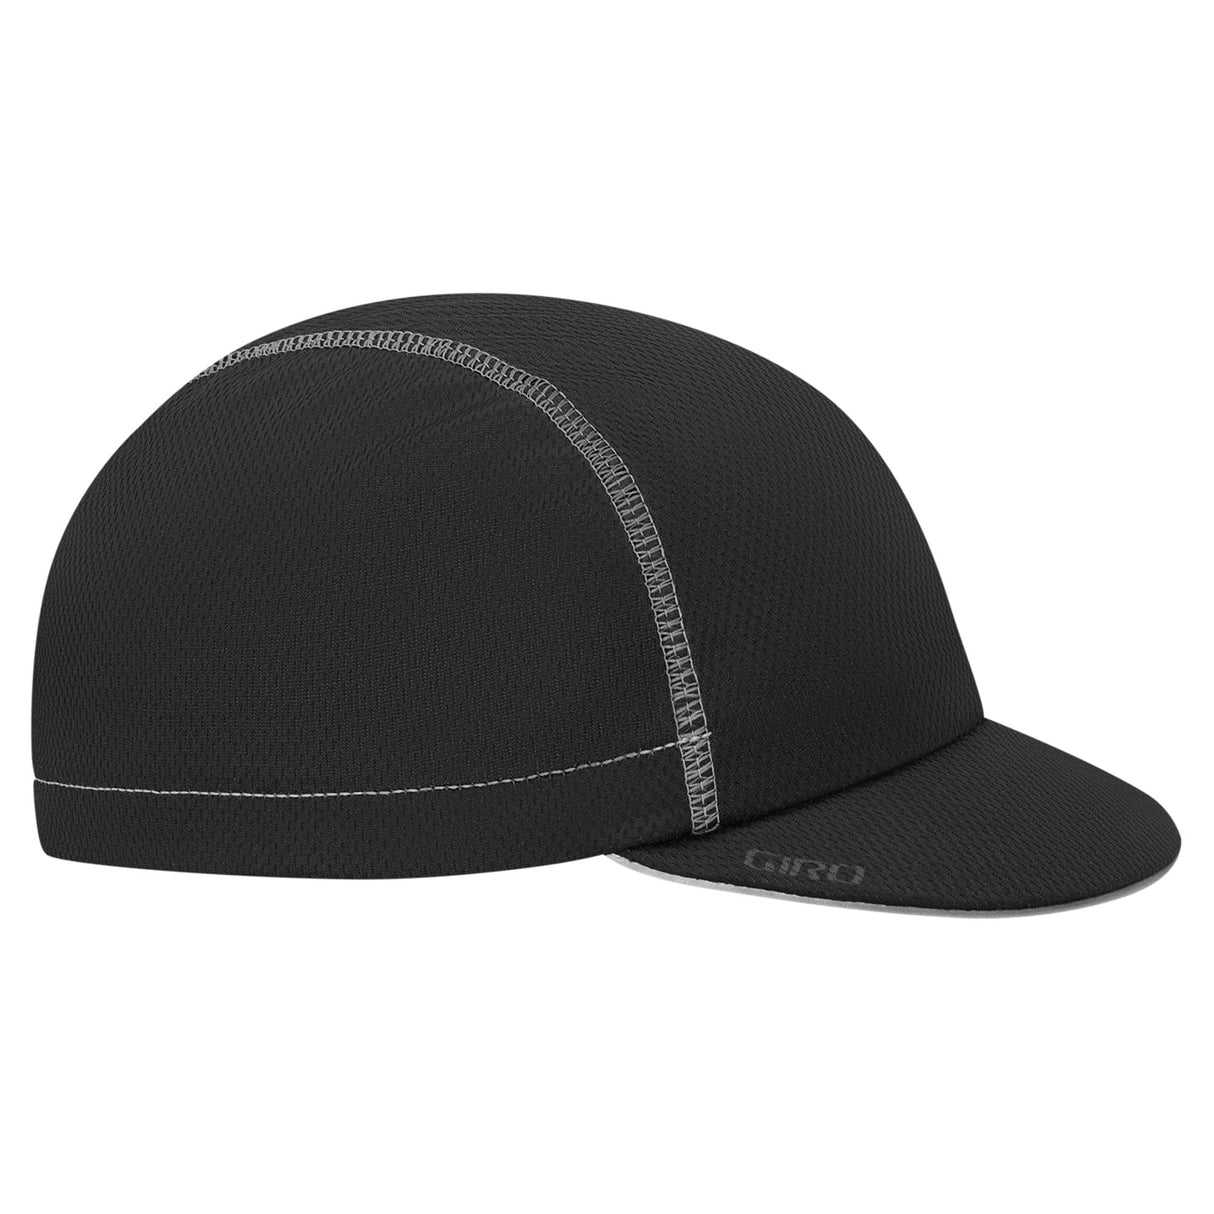 Giro Peloton Cap 2021: Black One Size